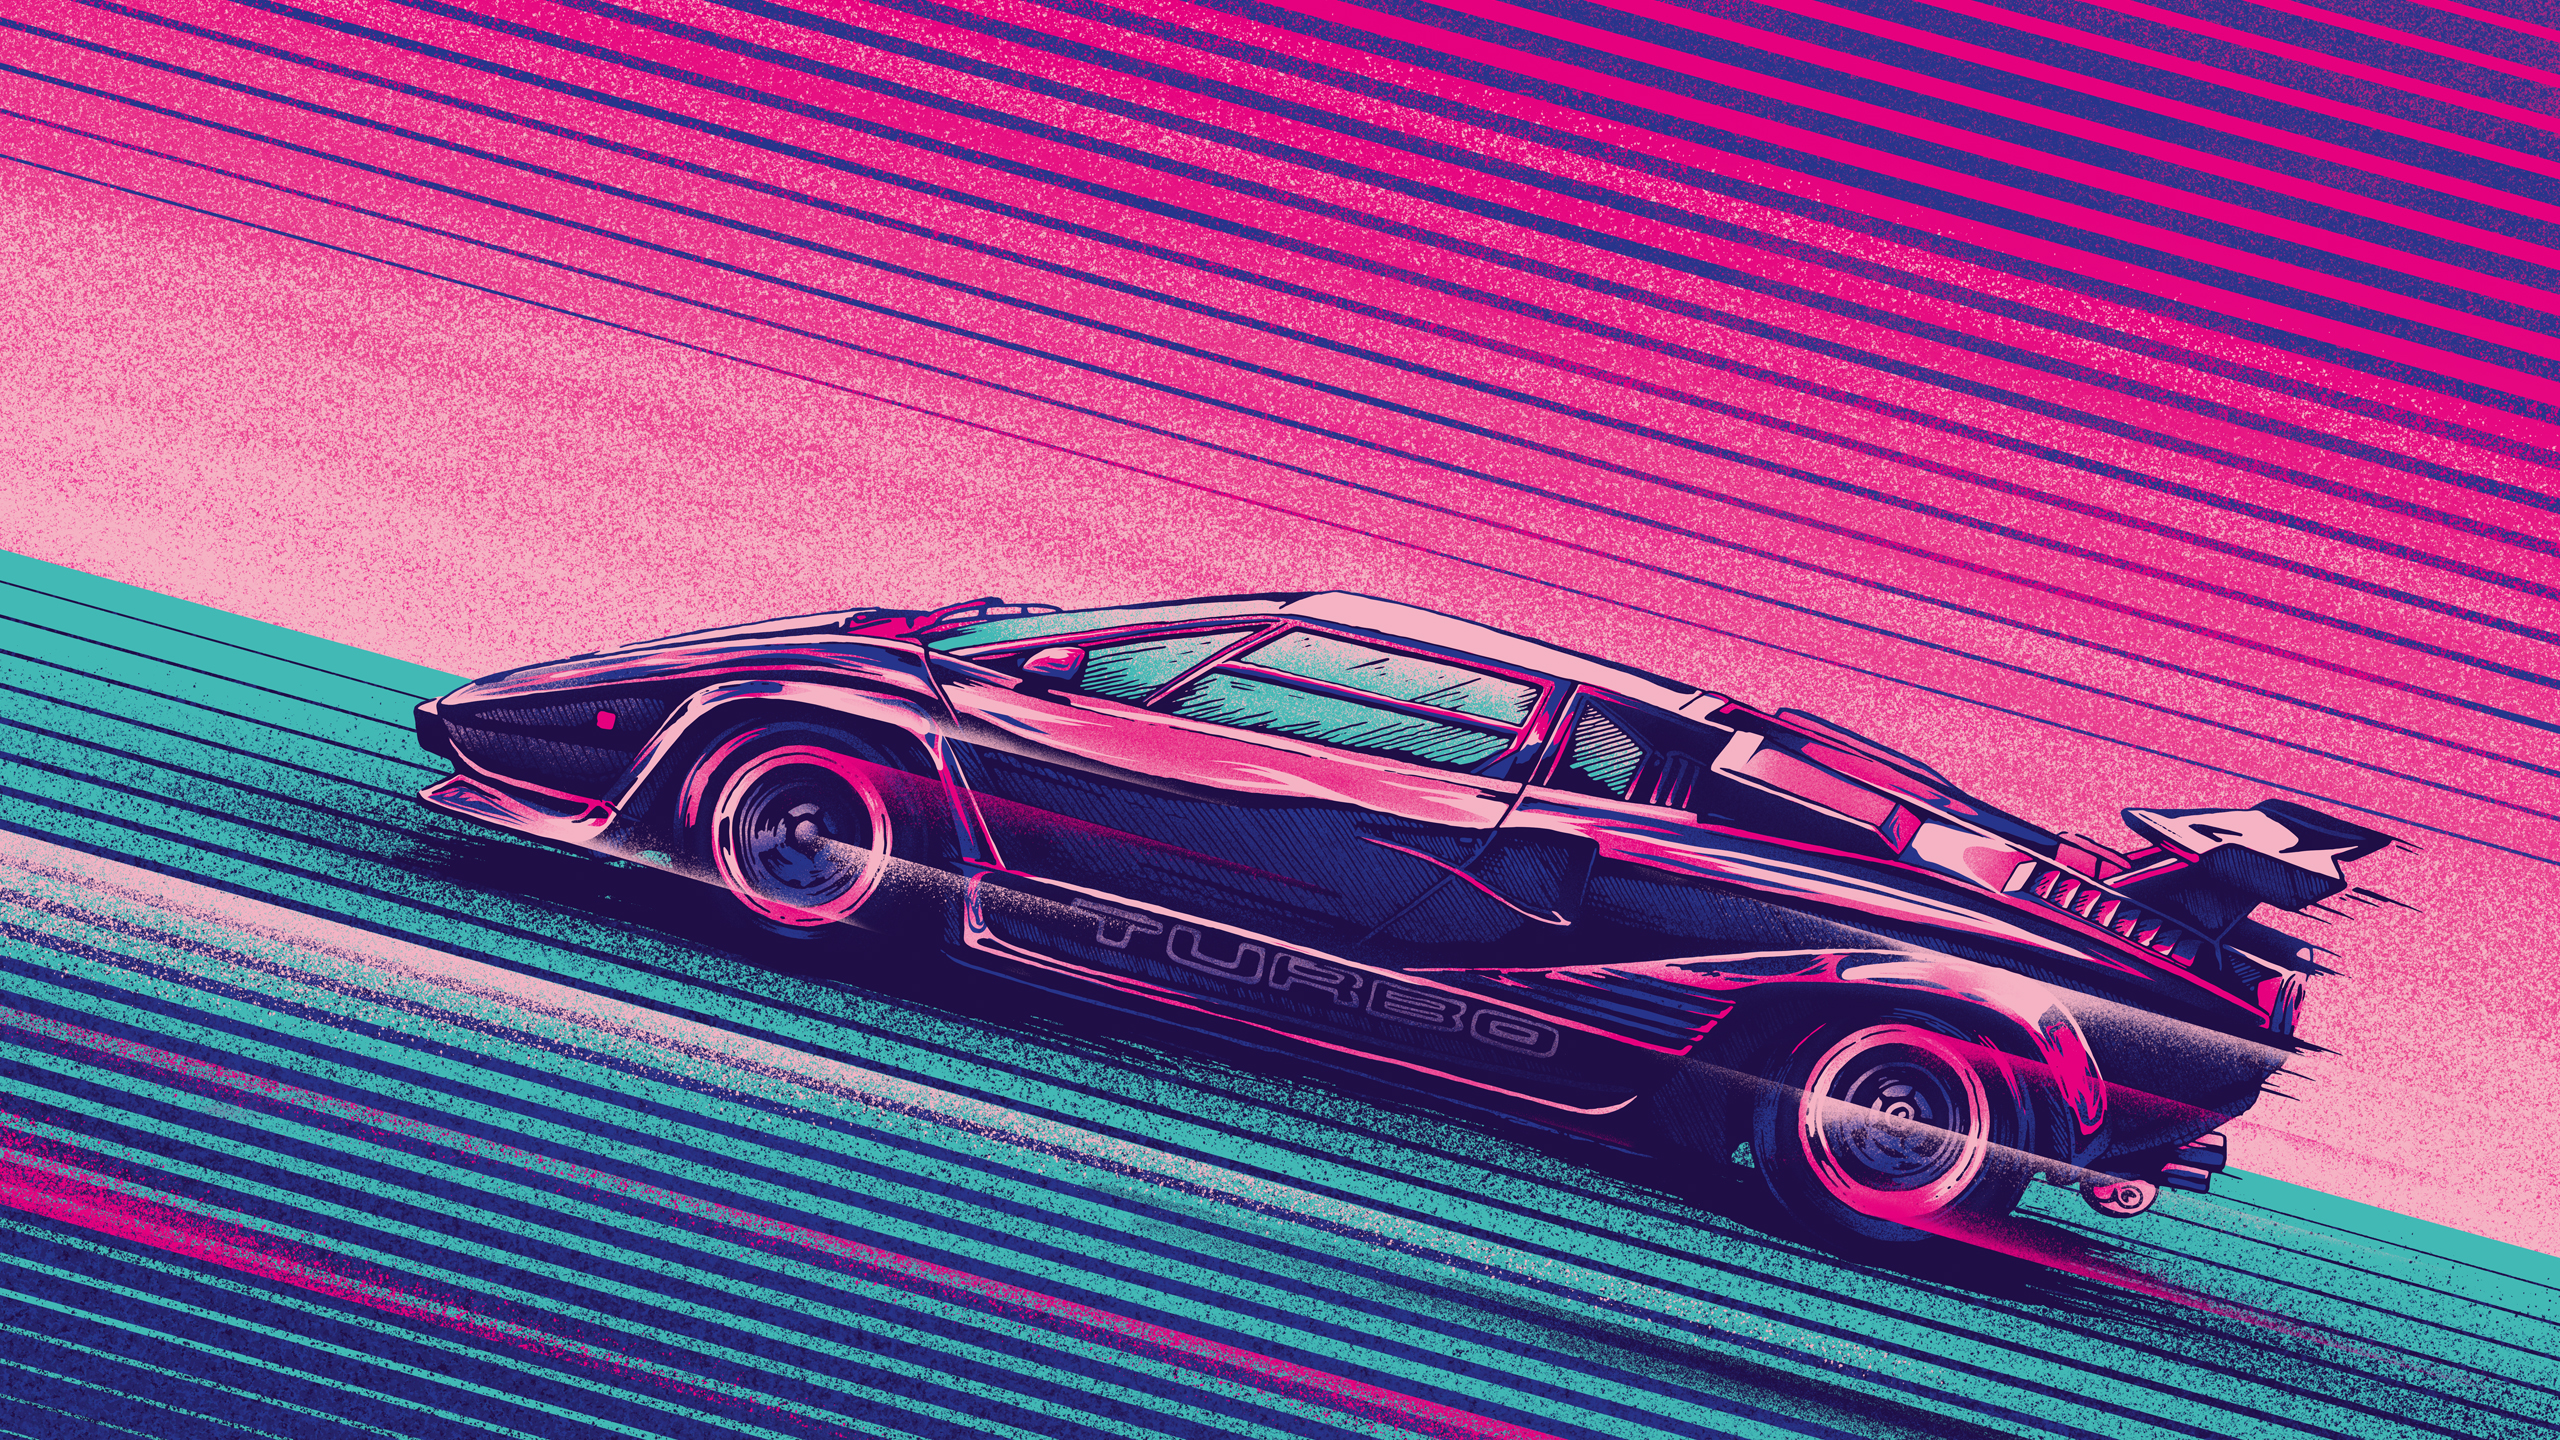 Lamborghini Countach Turbo (Petr Belák) [2560x1440]